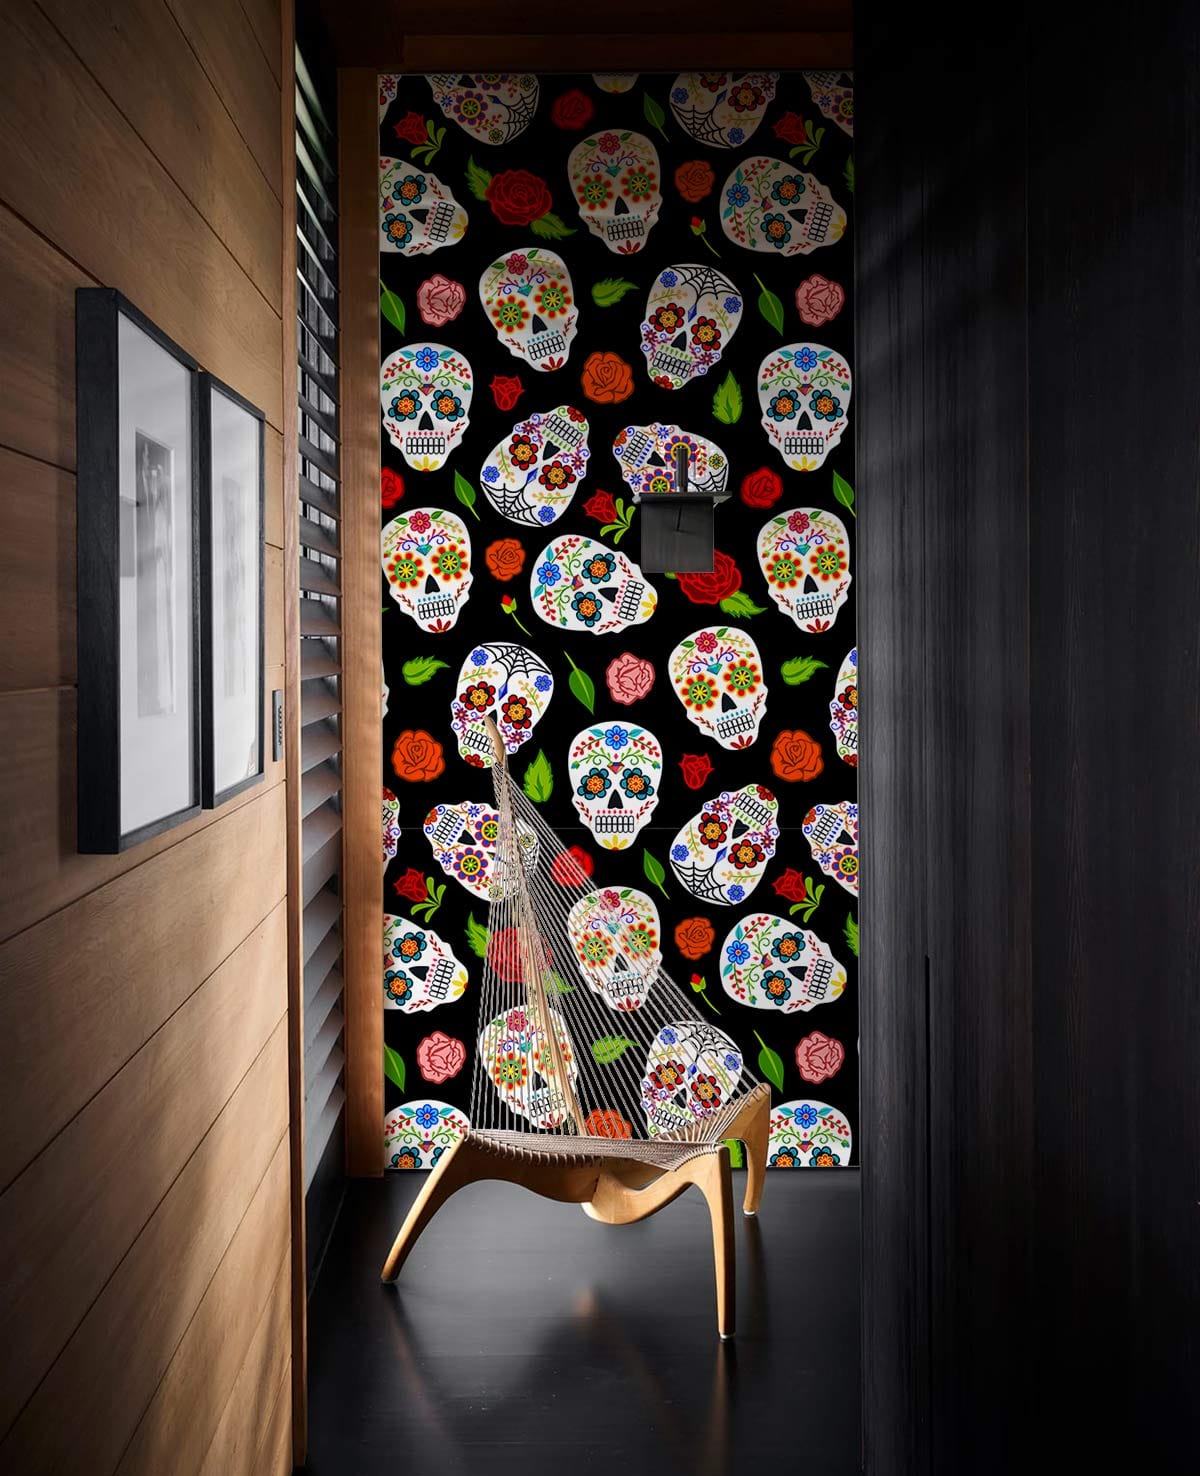 Skeleton & Rose Pattern Cool Wallpaper Decoration Idea